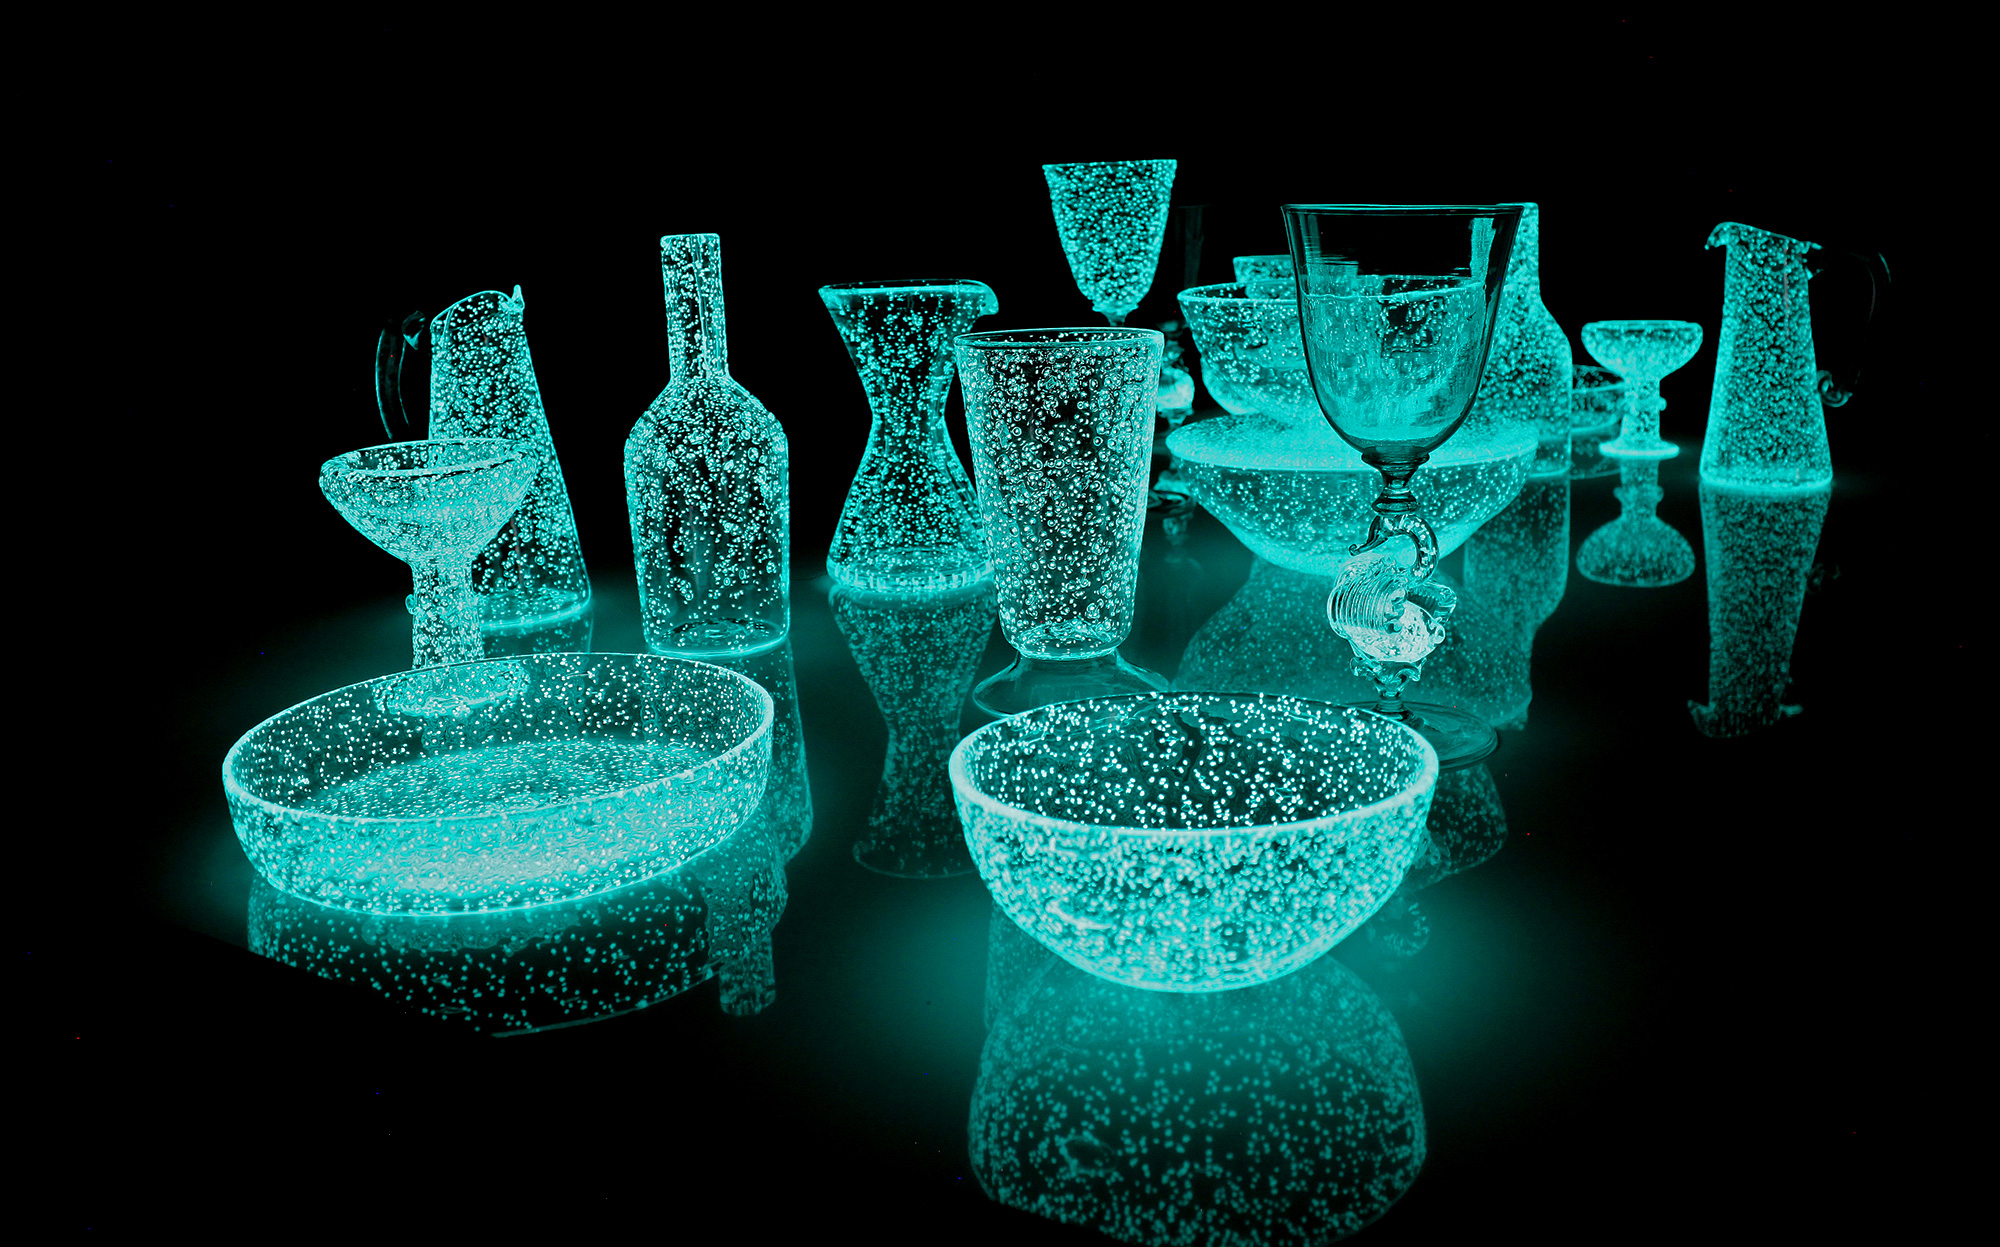 Glowing Glassware